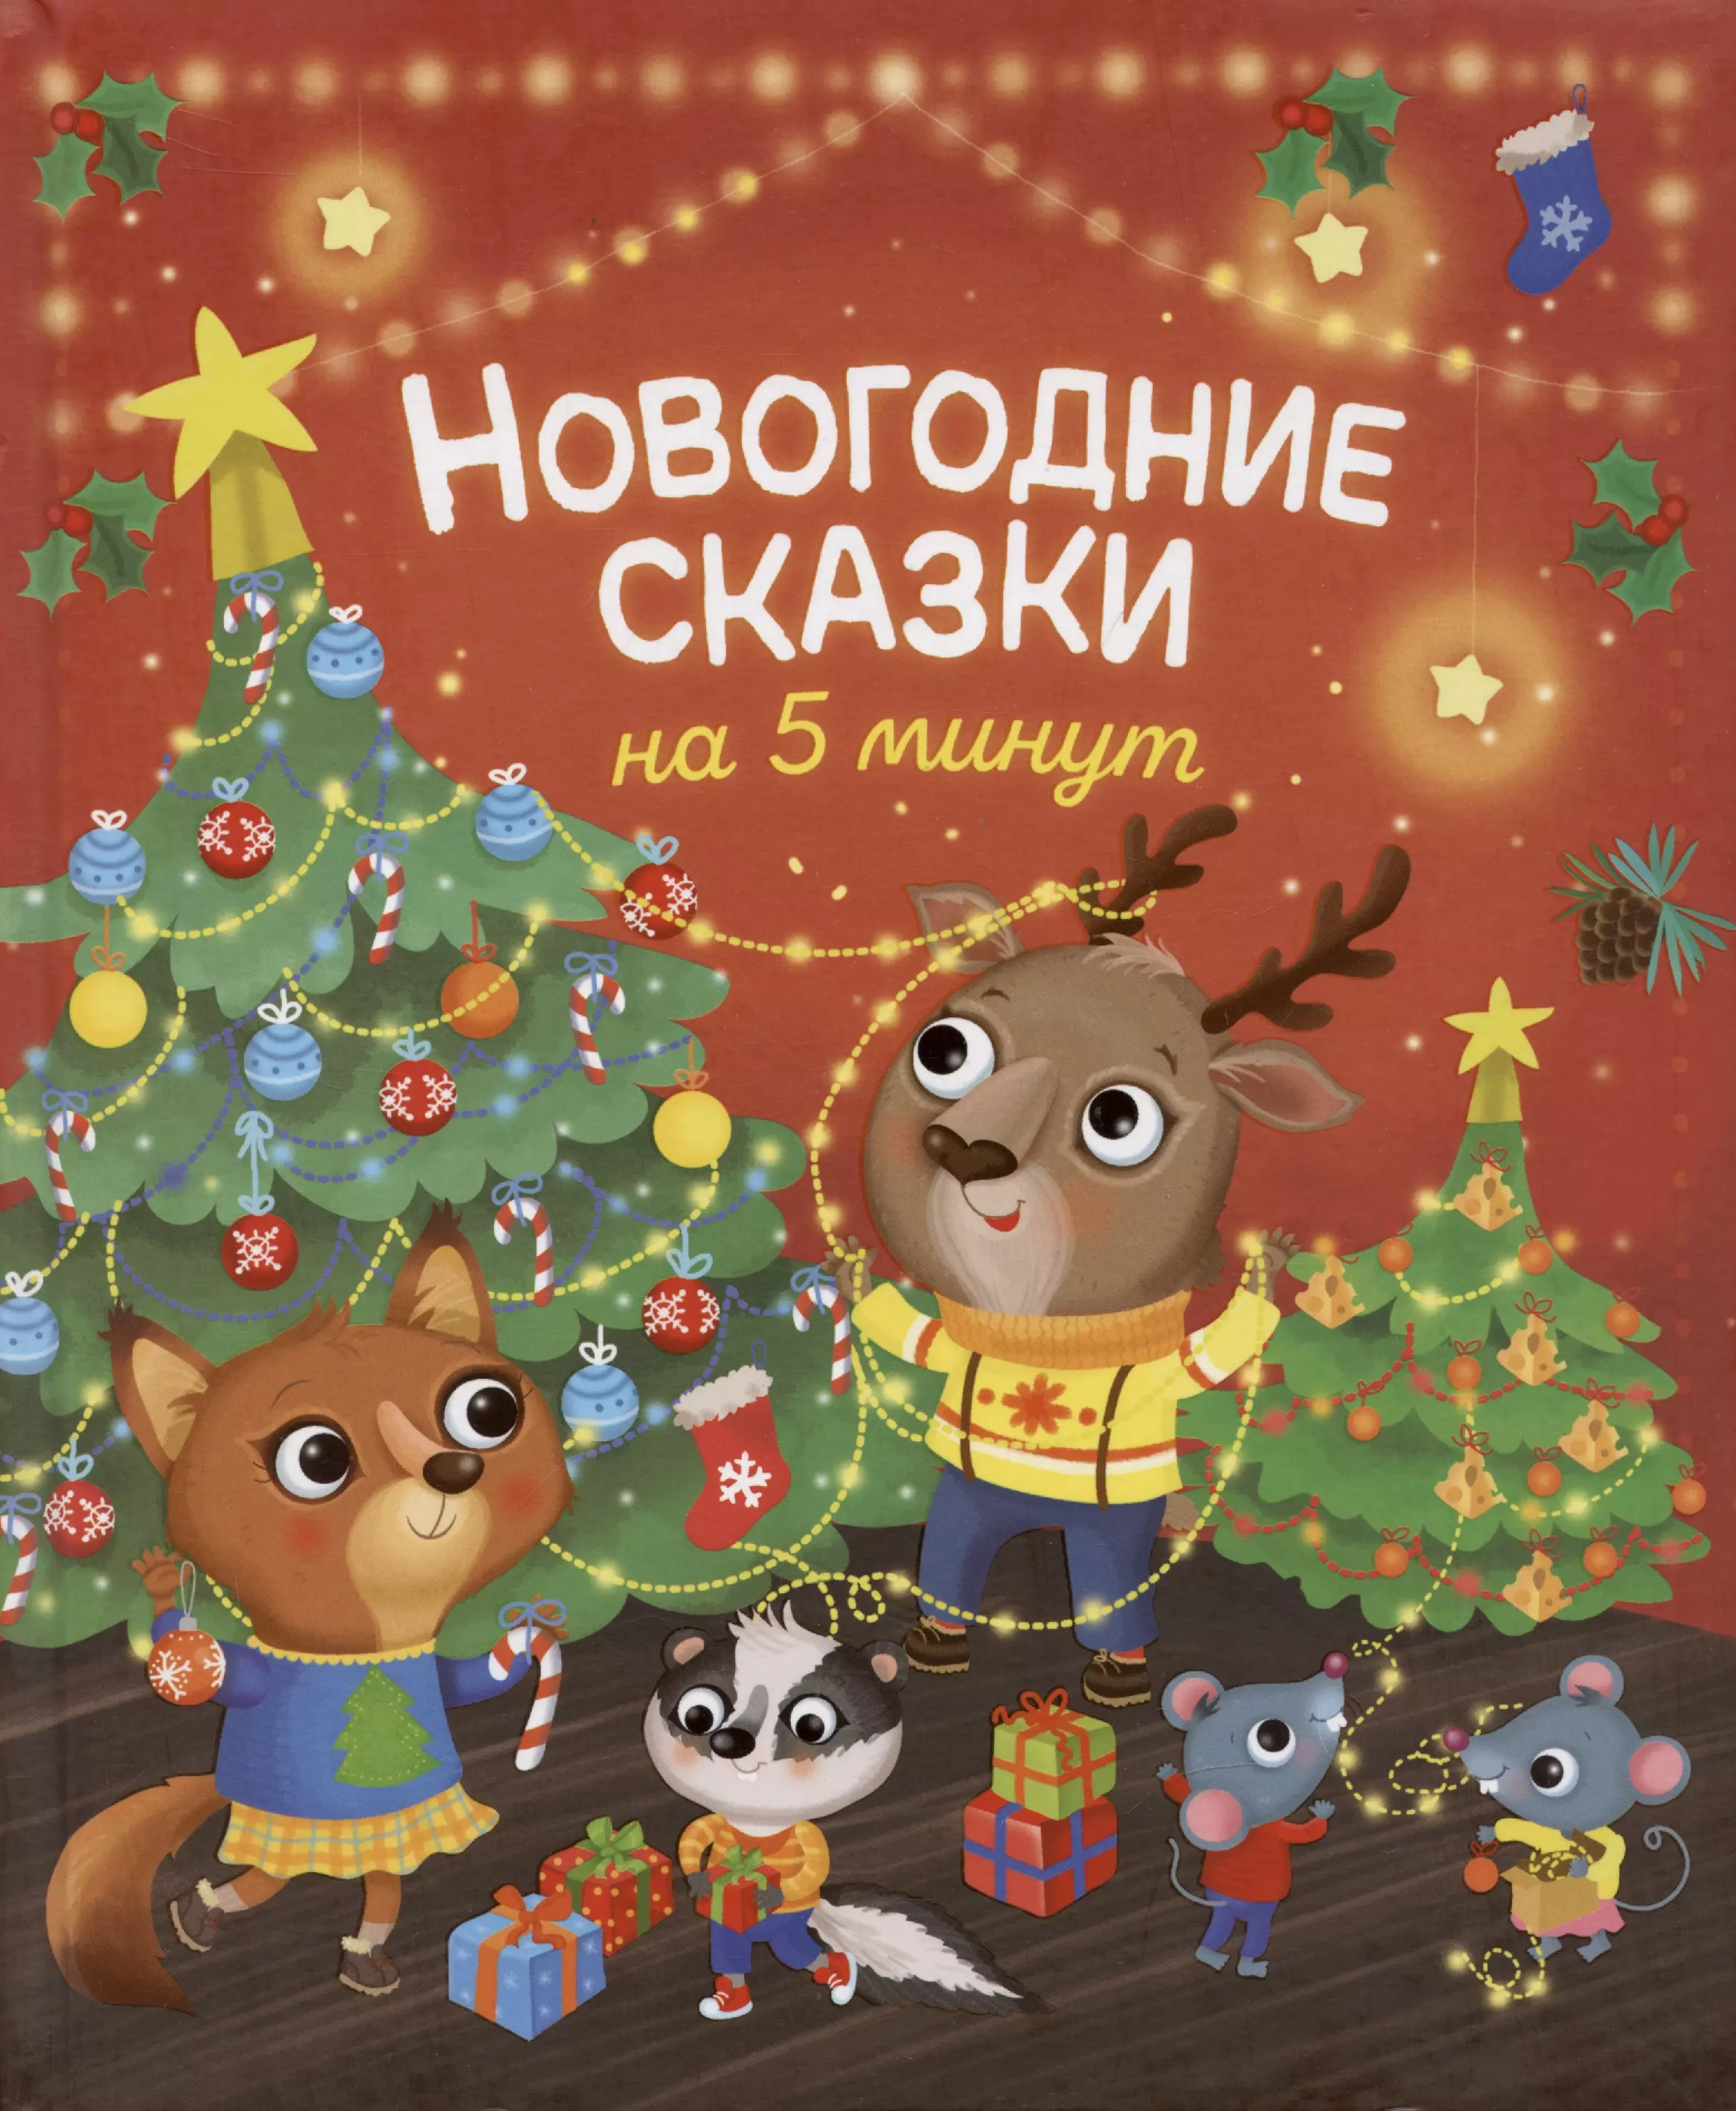 Строкина Анастасия Игоревна - Новогодние сказки на 5 минут